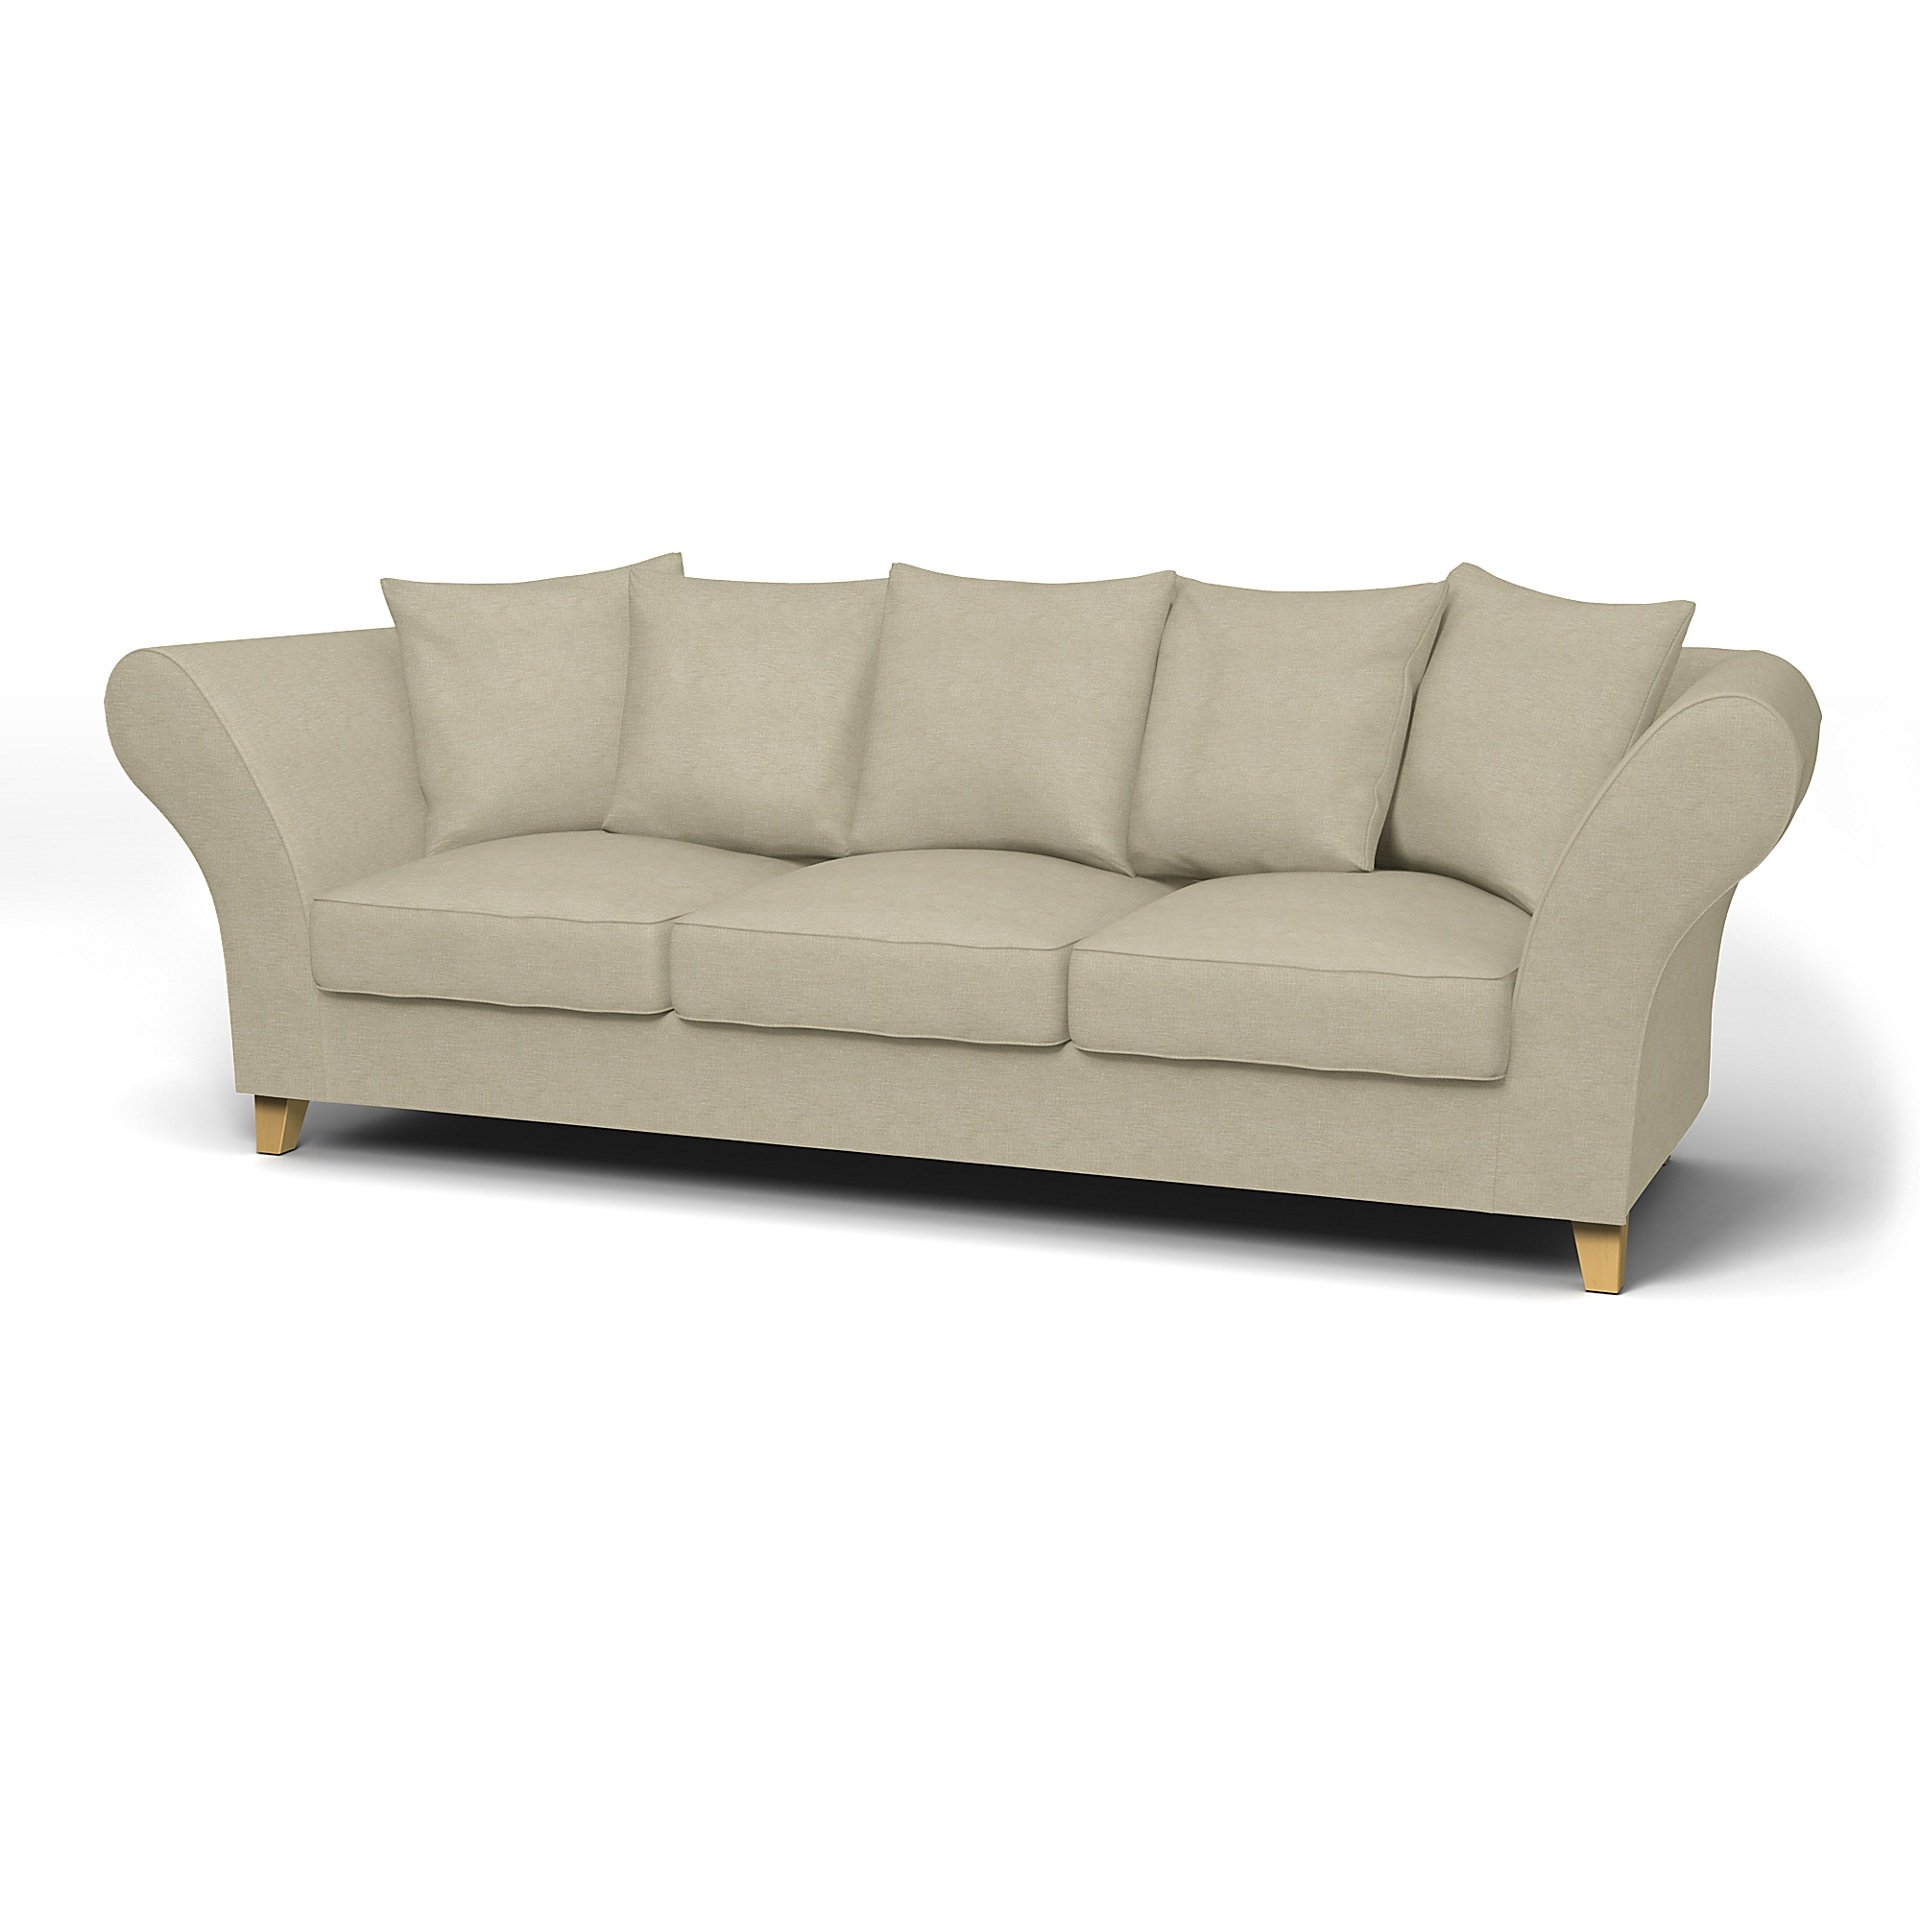 IKEA - Backa 3.5 Seater Sofa Cover, Soft White, Boucle & Texture - Bemz